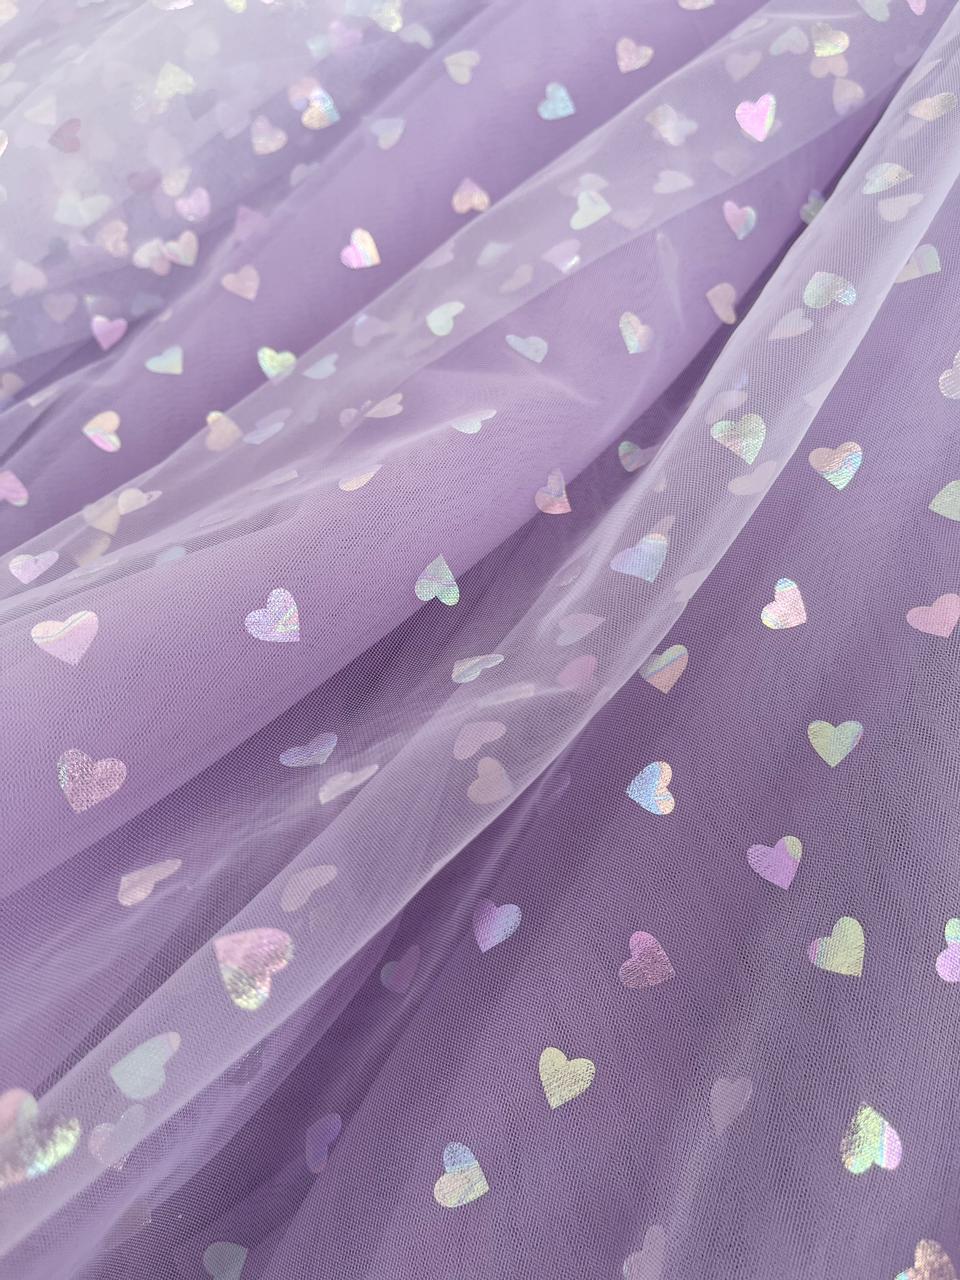 Midi purple dress with printed hearts and spaghetti straps